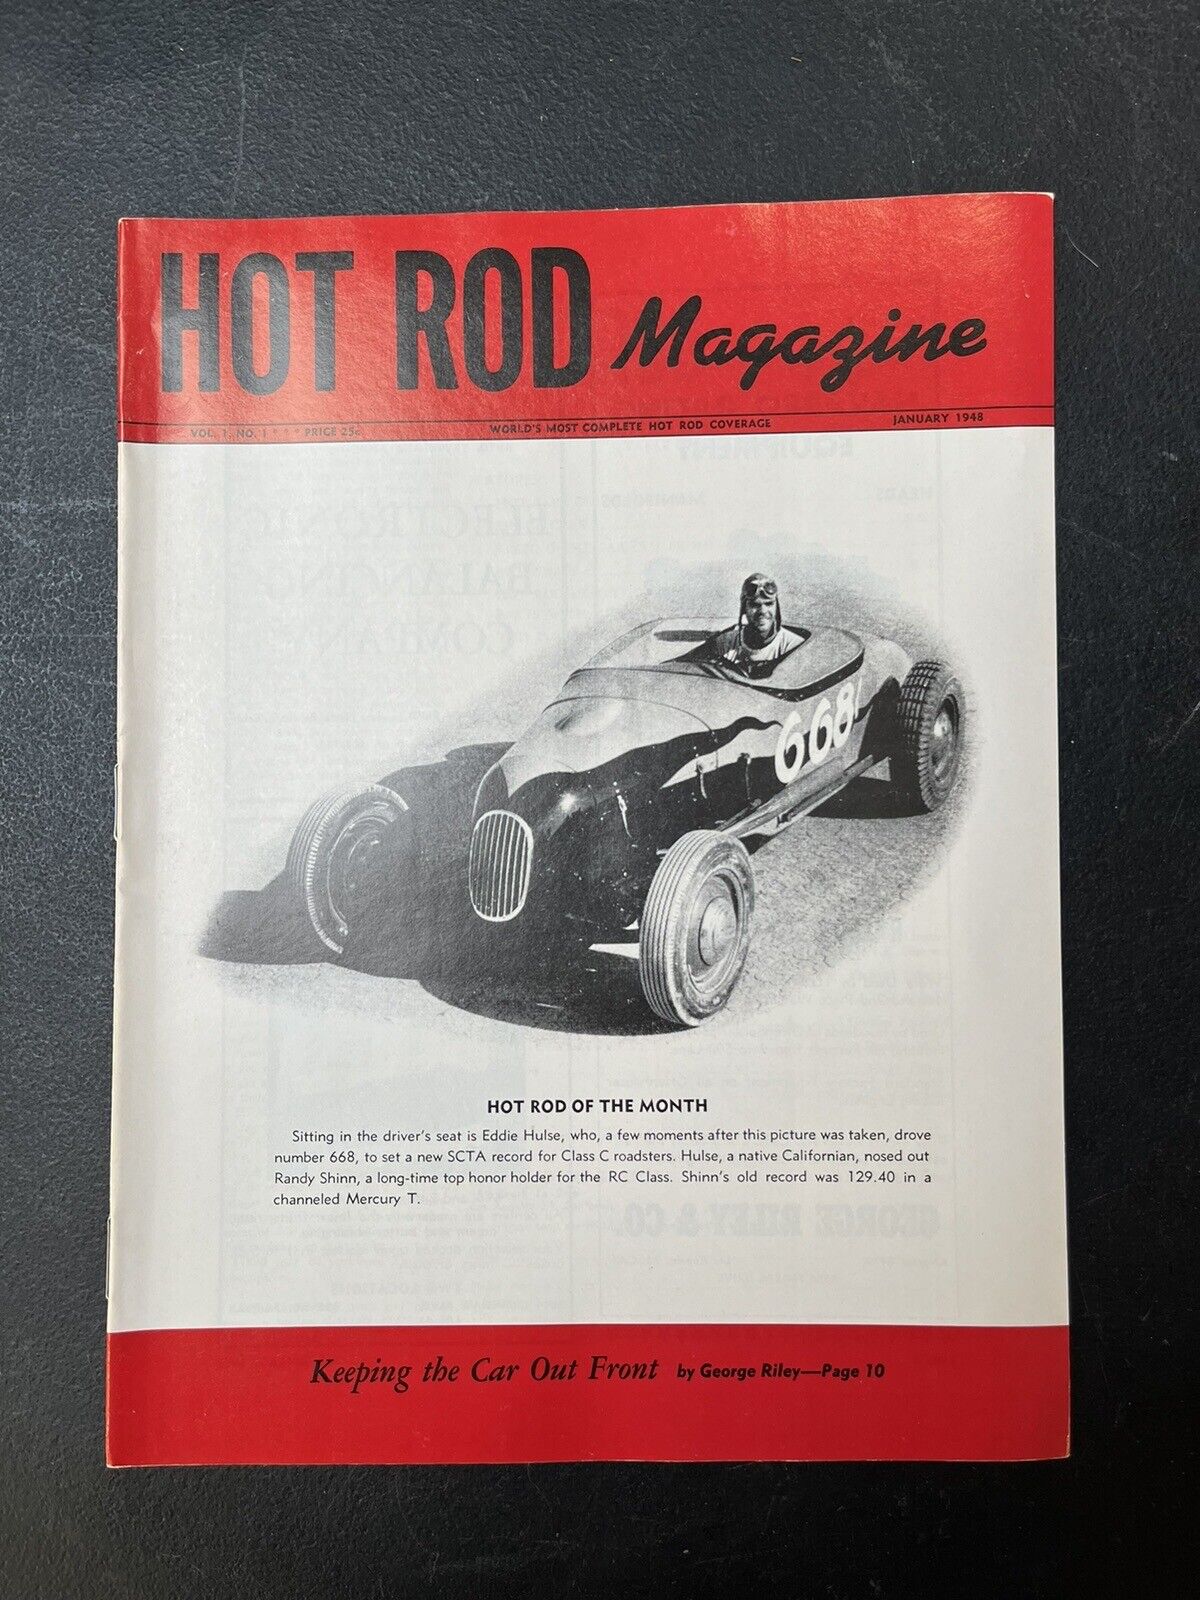 *Lot of 20* Vintage 1948 Hot Rod Magazine Volume 1 Reprint / Reissue